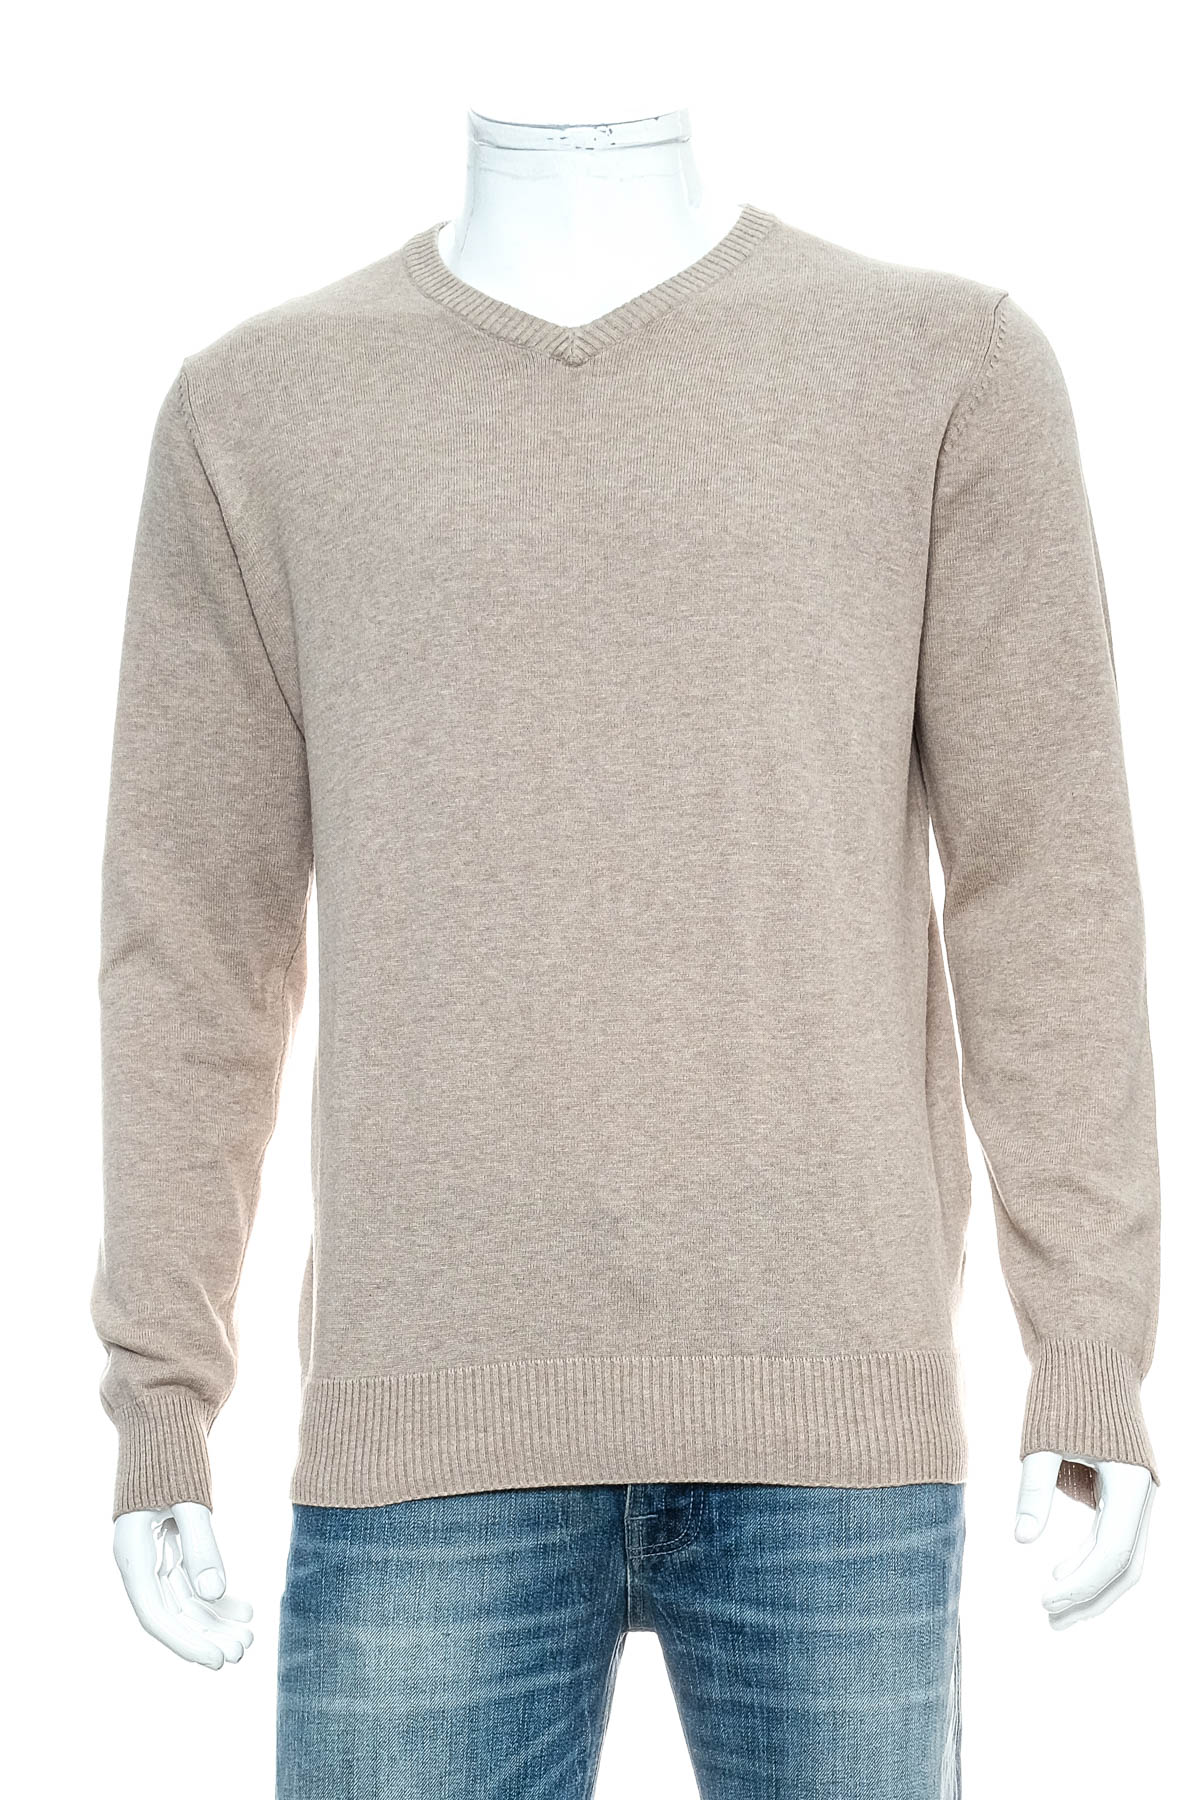 Men's sweater - KVL - 0